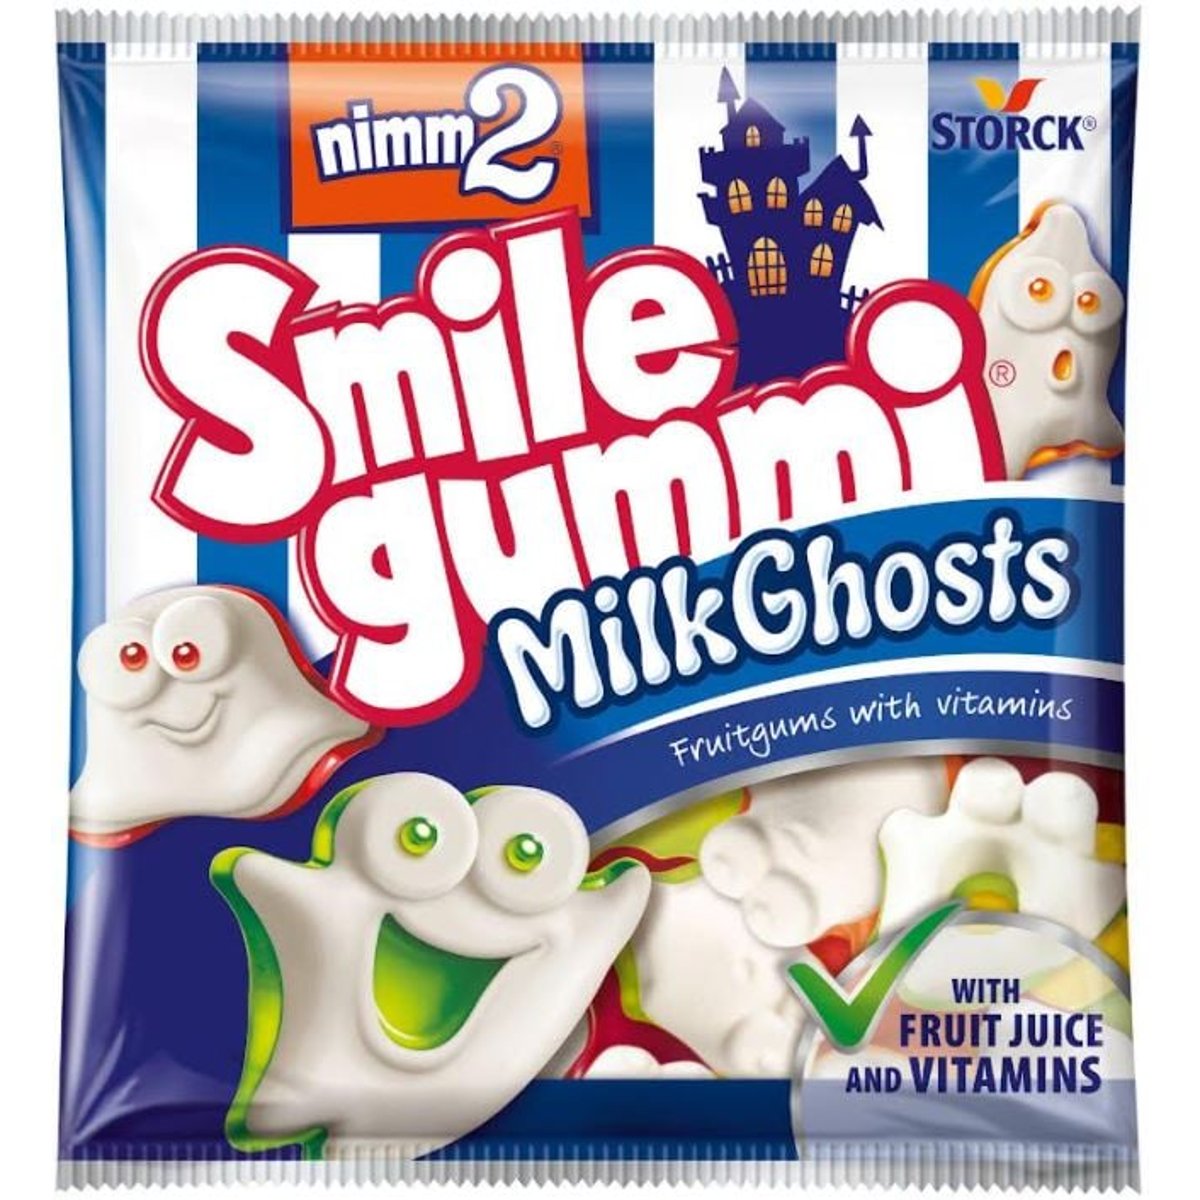 nimm2 Smilegummi Milk Ghosts